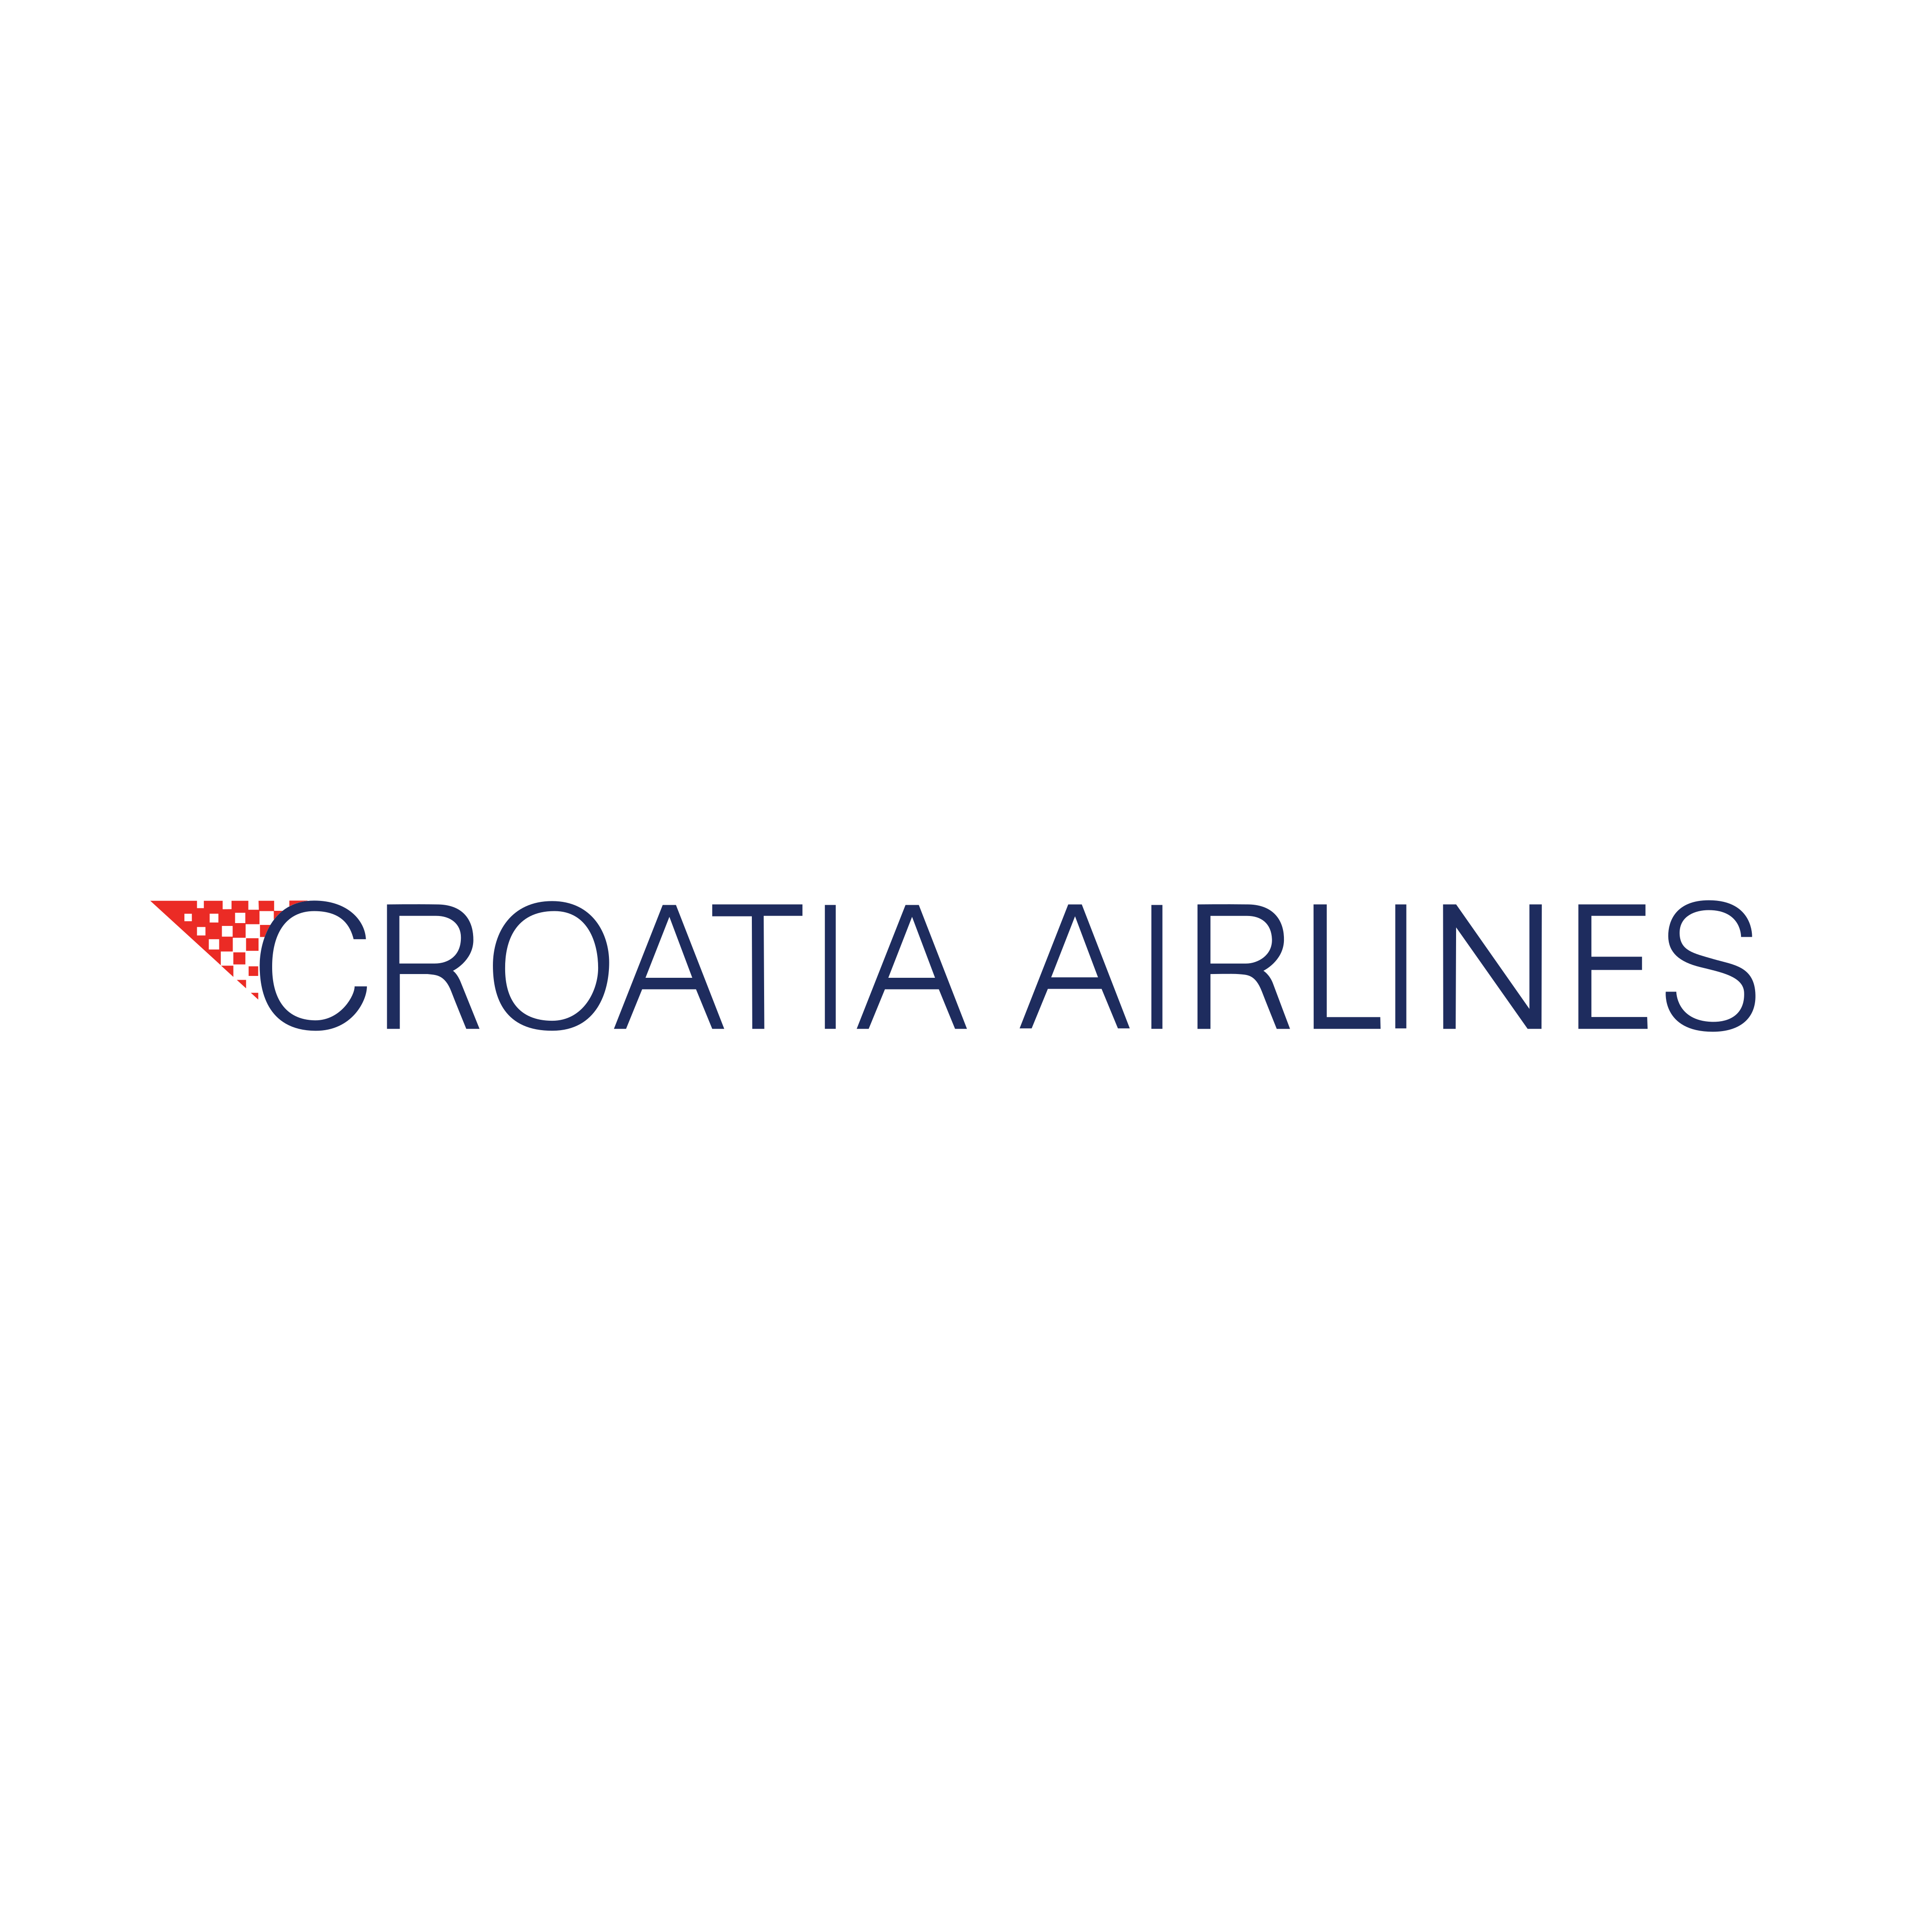 Croatia Airlines Logo PNG.